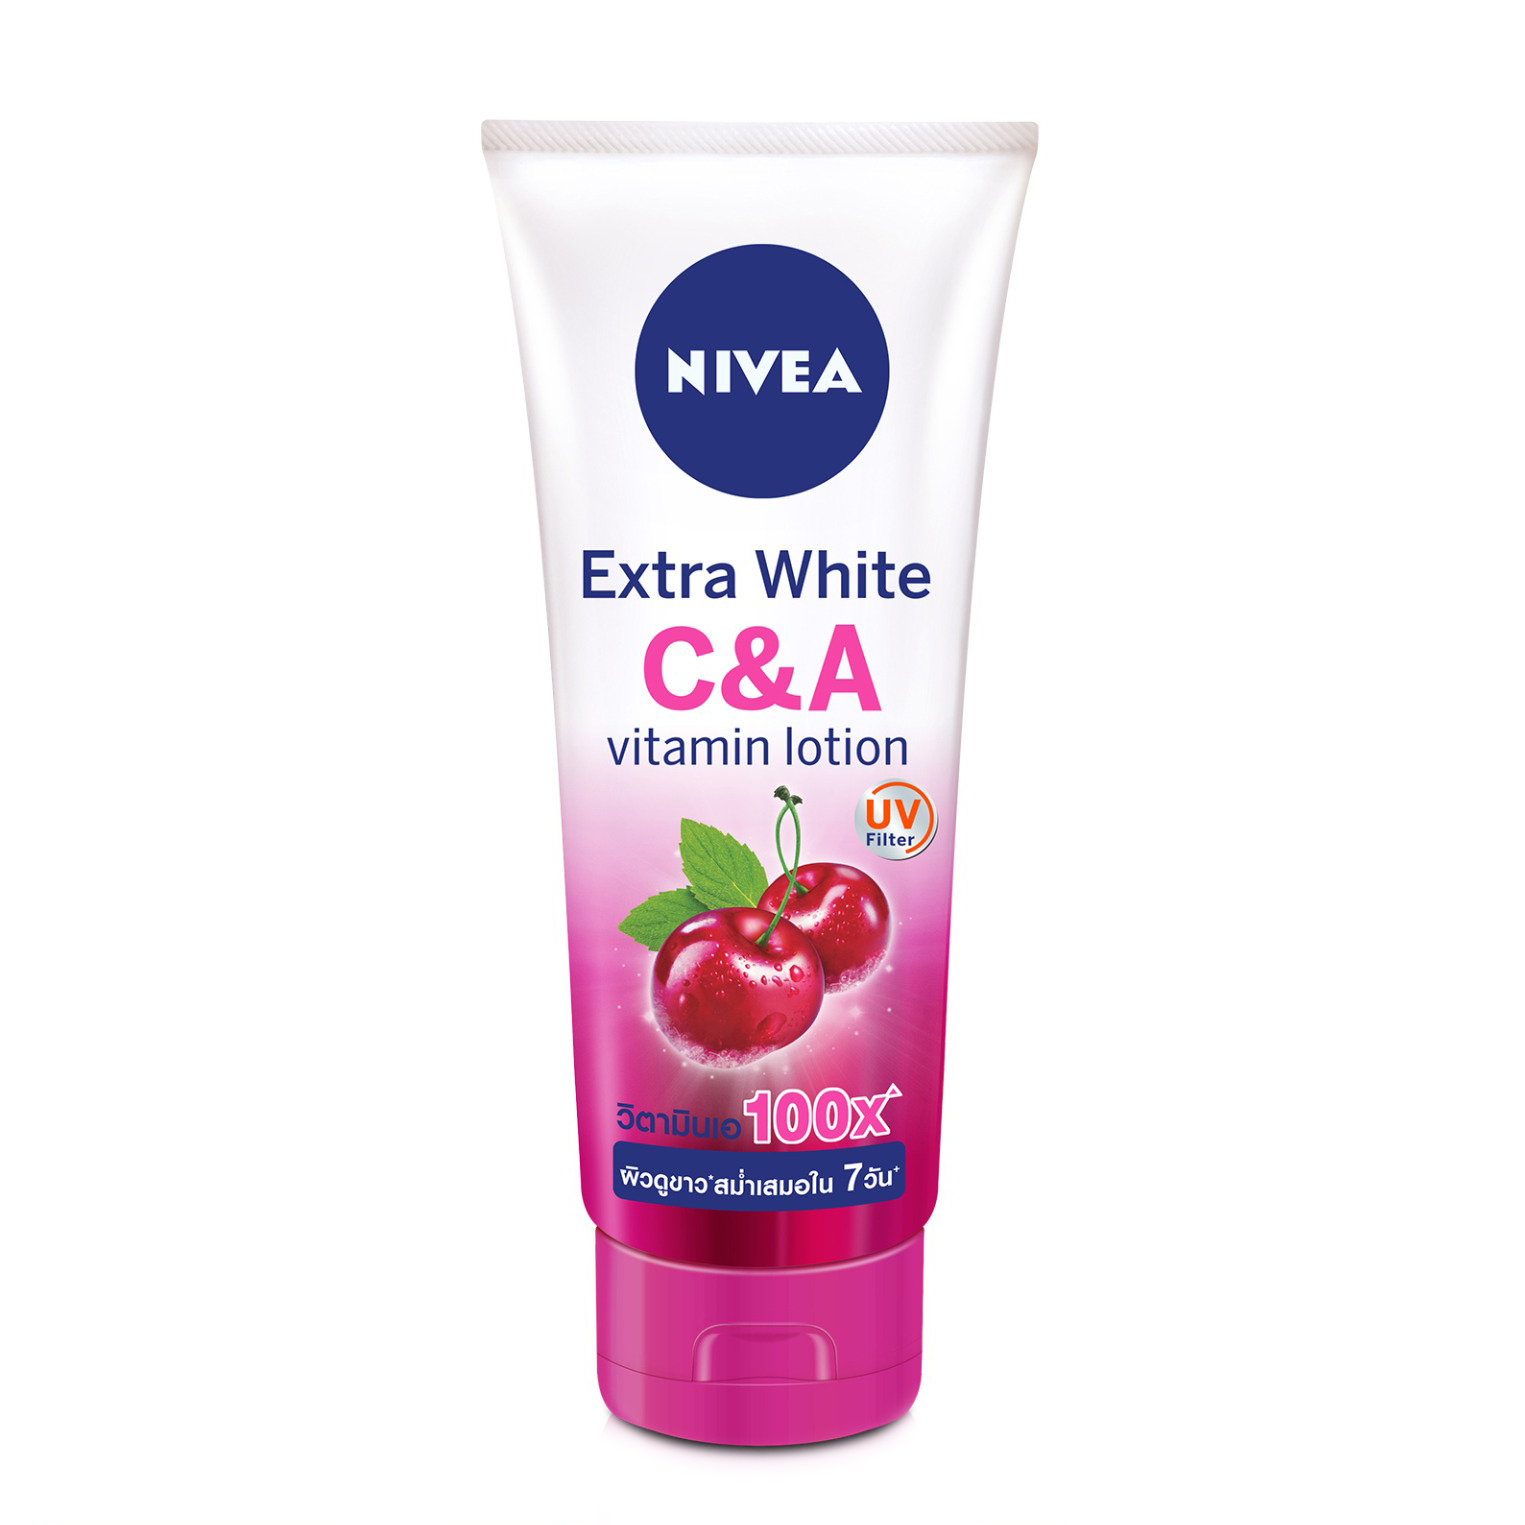 NIVEA Extra White C&A Vitamin Lotion 